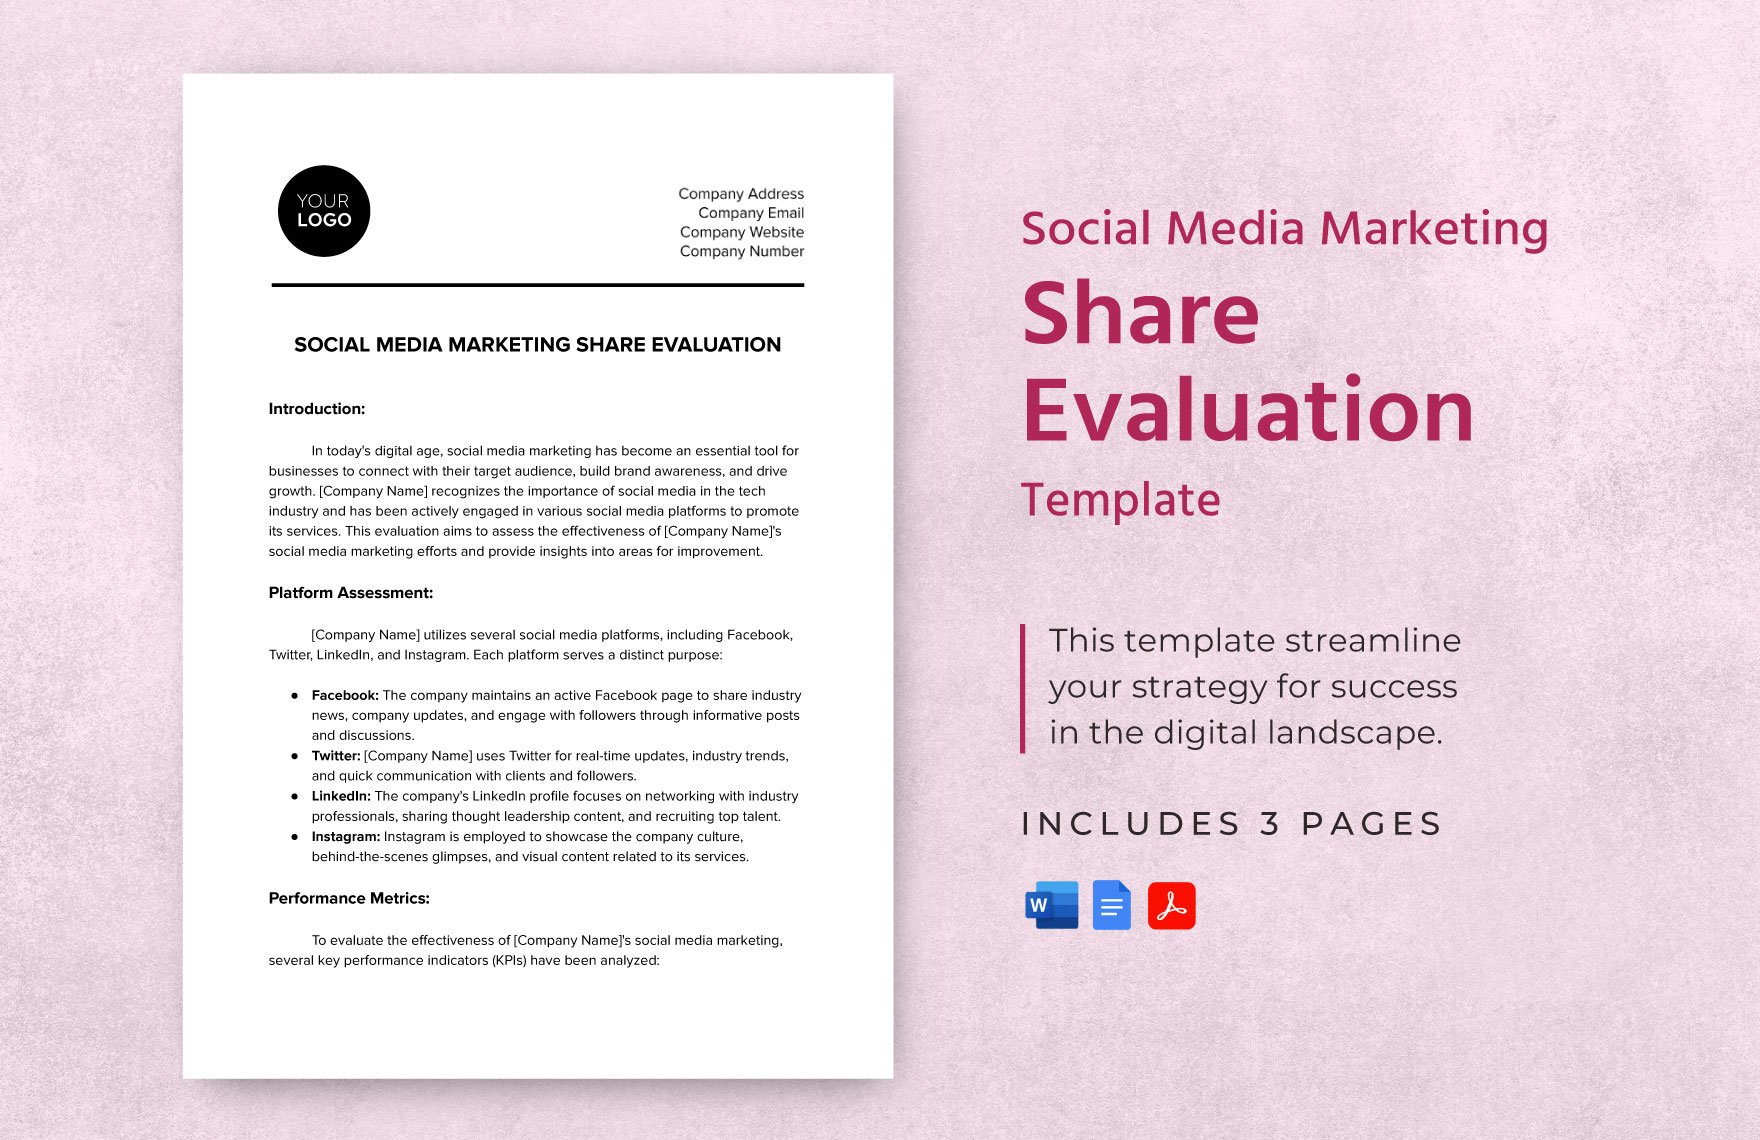 Social Media Marketing Share Evaluation Template in Word, Google Docs, PDF